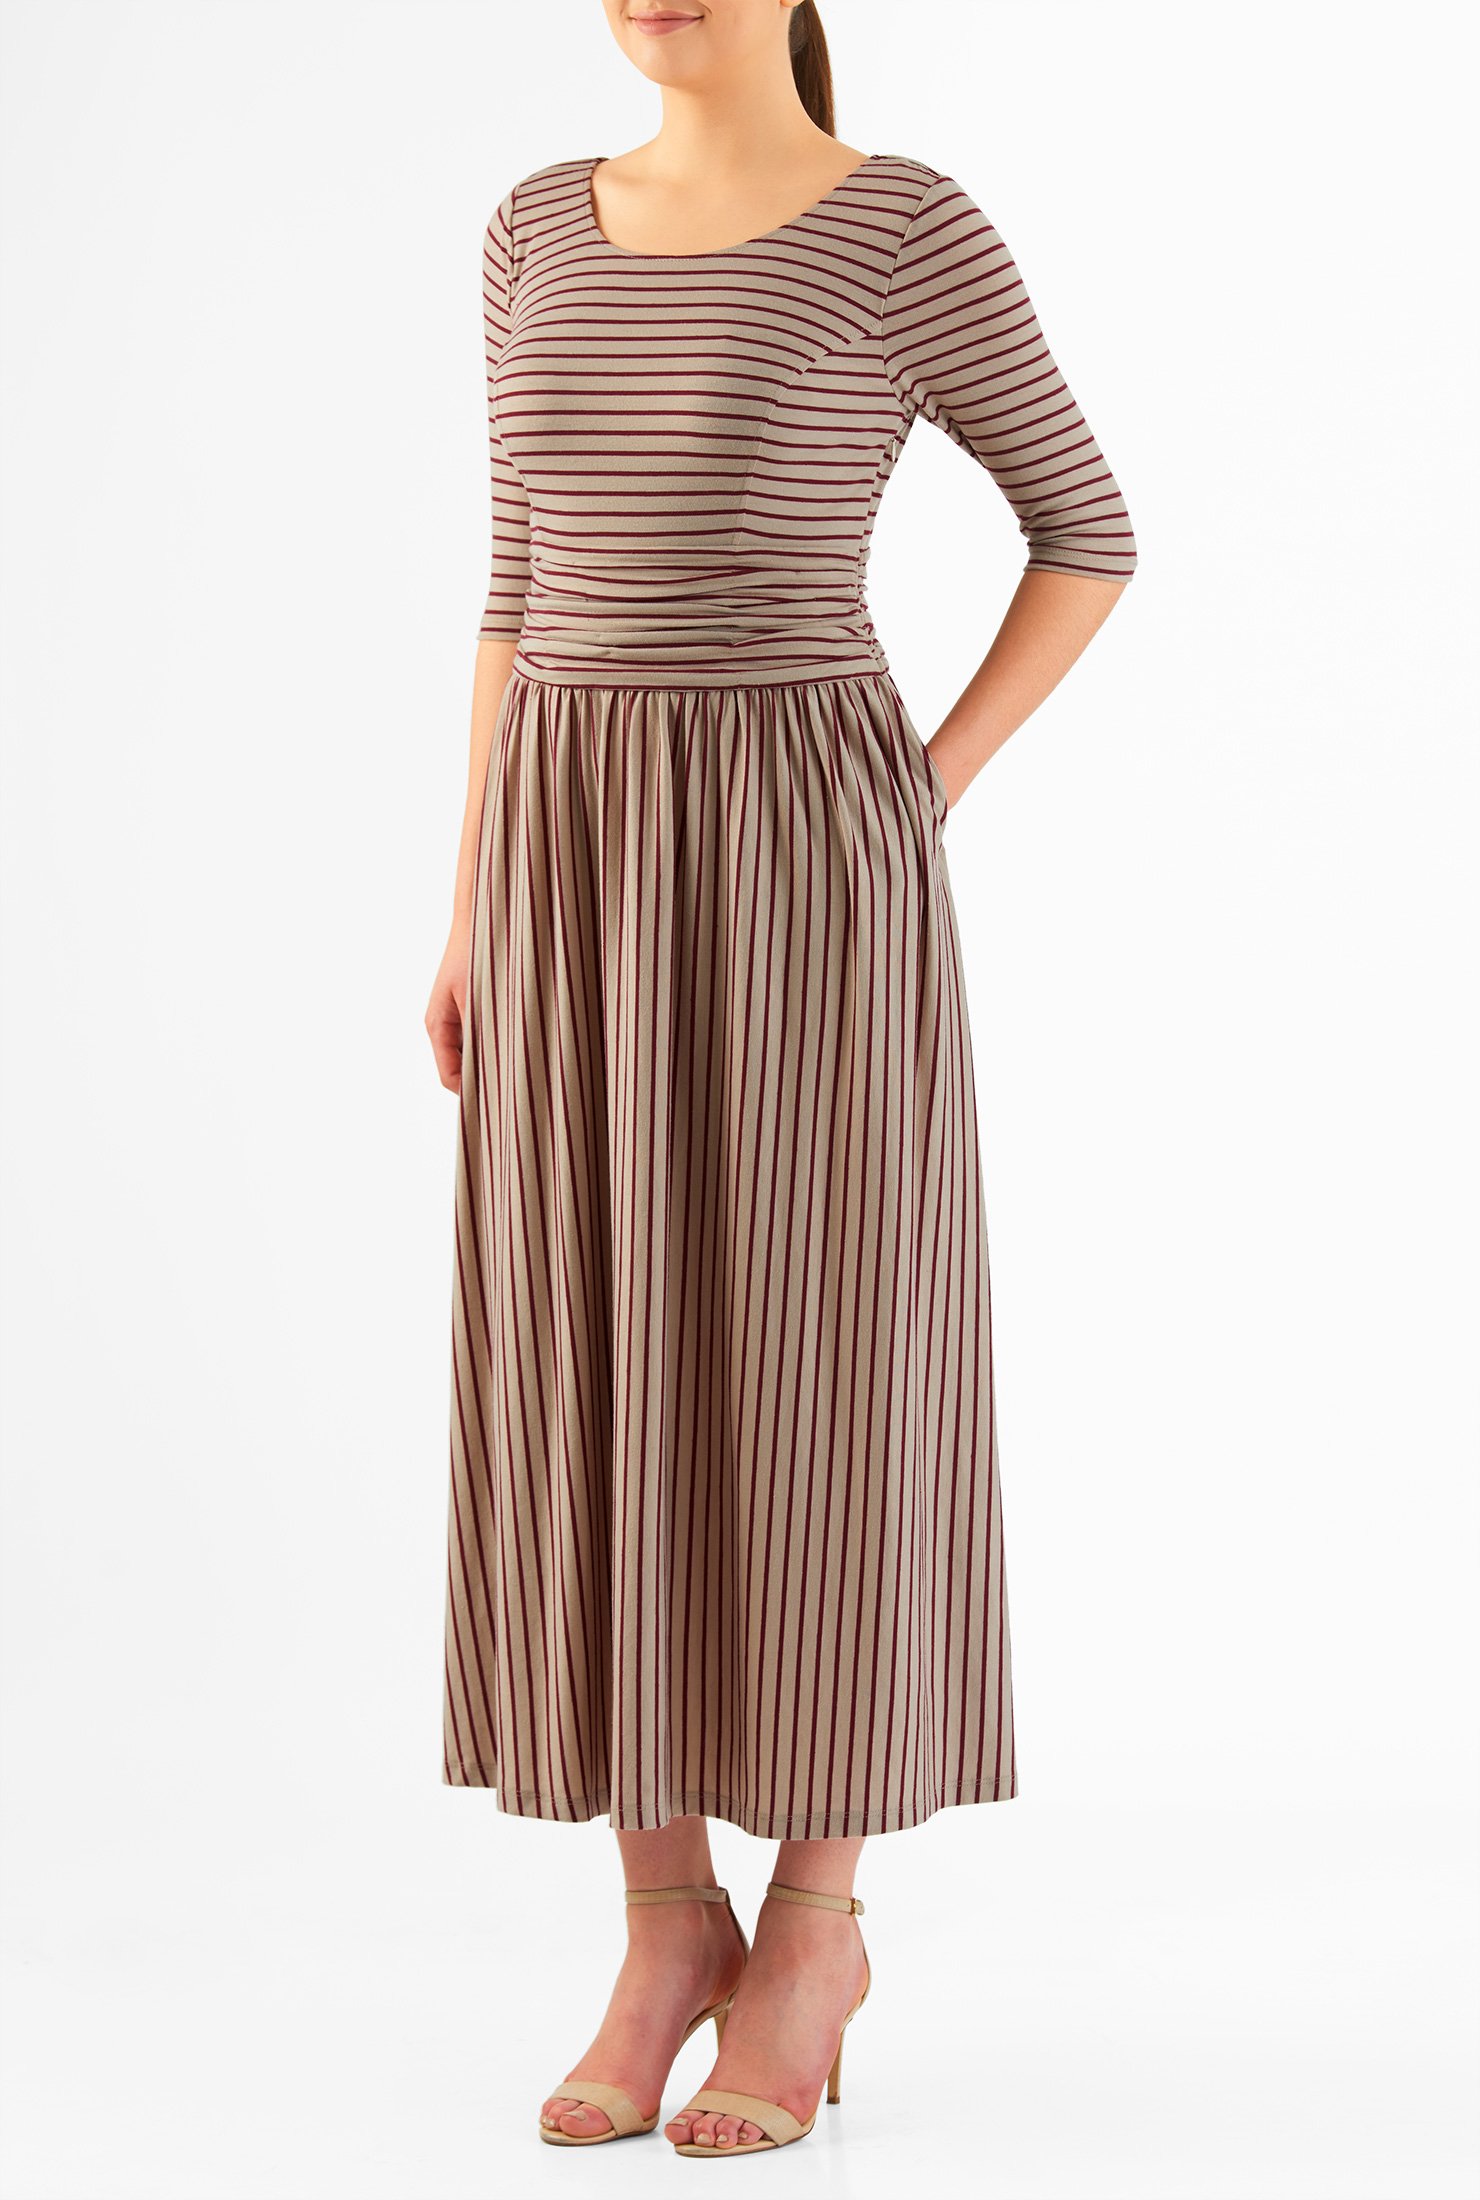 Shop Ruched waist stripe cotton knit midi dress eShakti